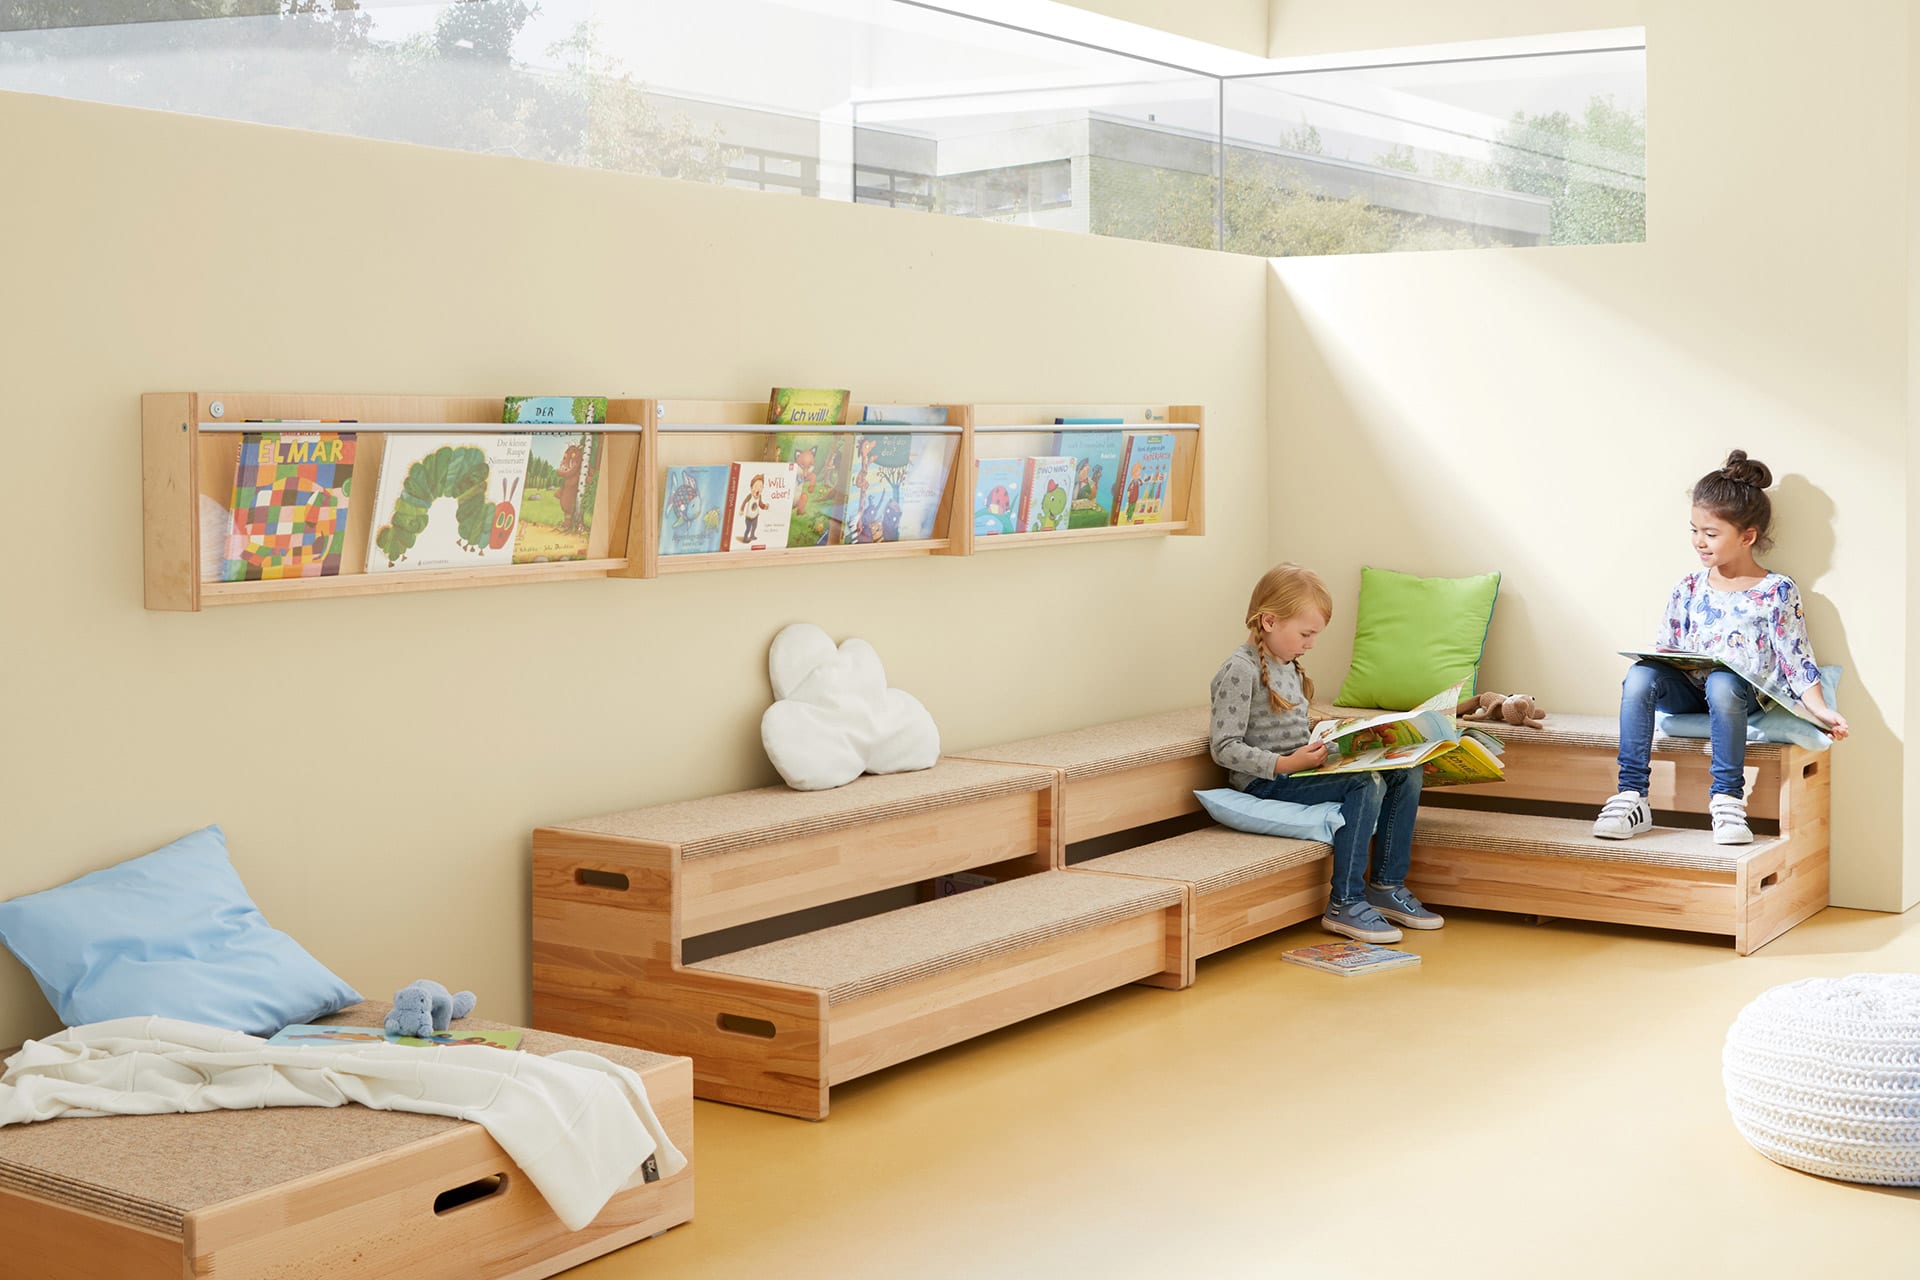 Indoor-Spielplatz | 5 Produkt-Tipps | Wandbücherregal | Bücherregale hängen an der Wand